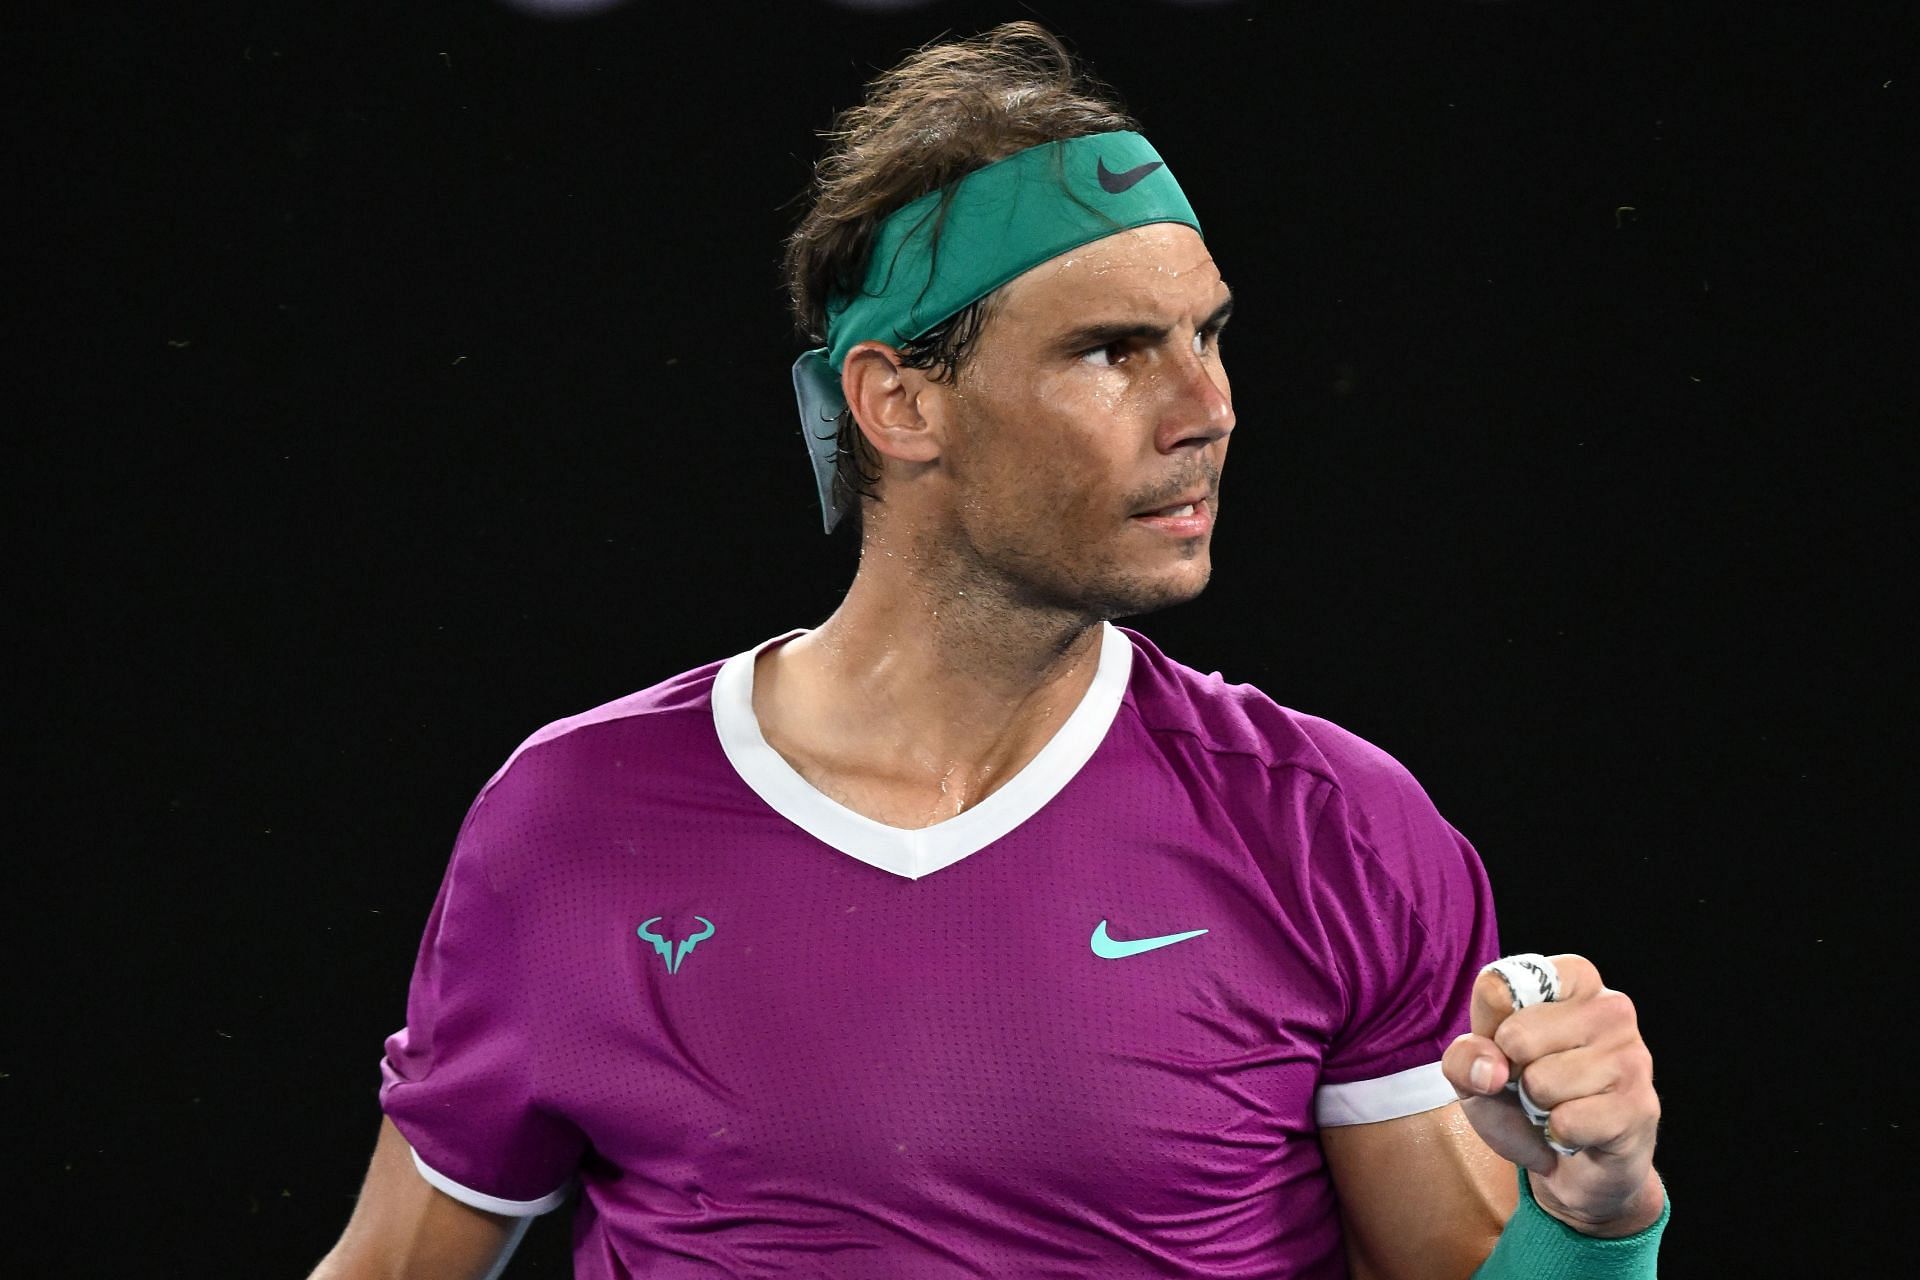 Rafael Nadal at the 2022 Australian Open